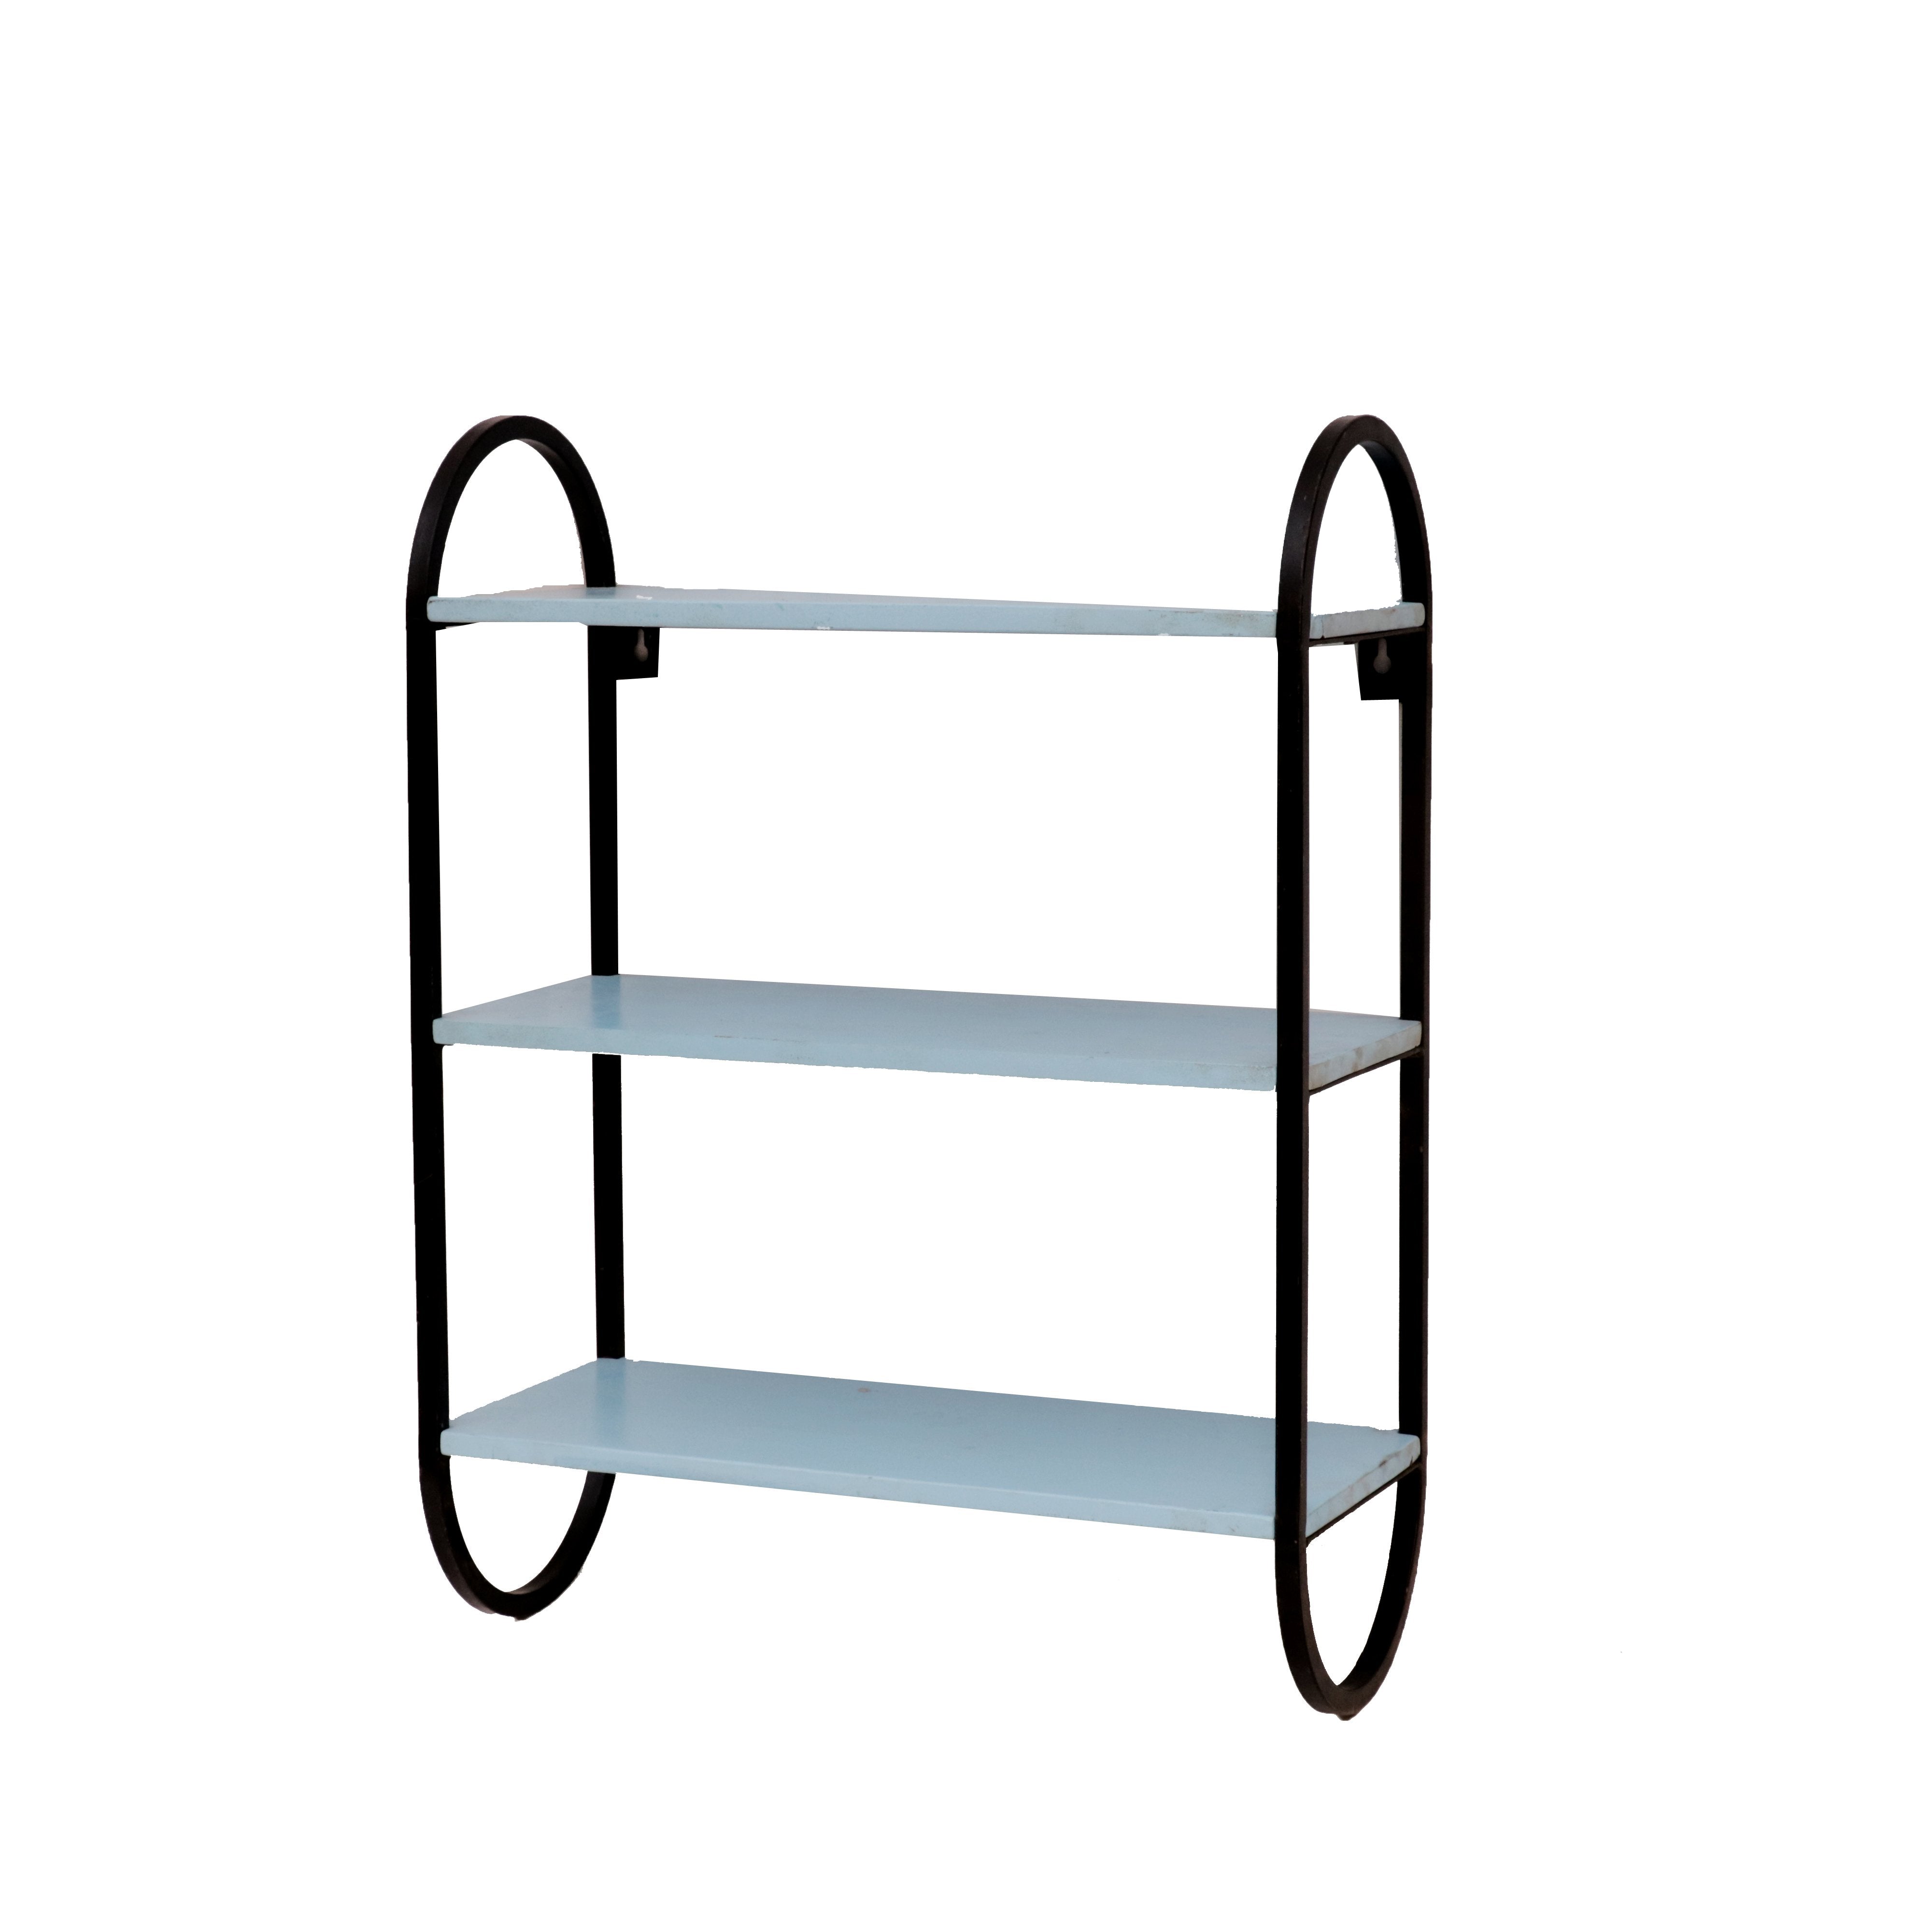 Oval Facing Frame Shelf Rack